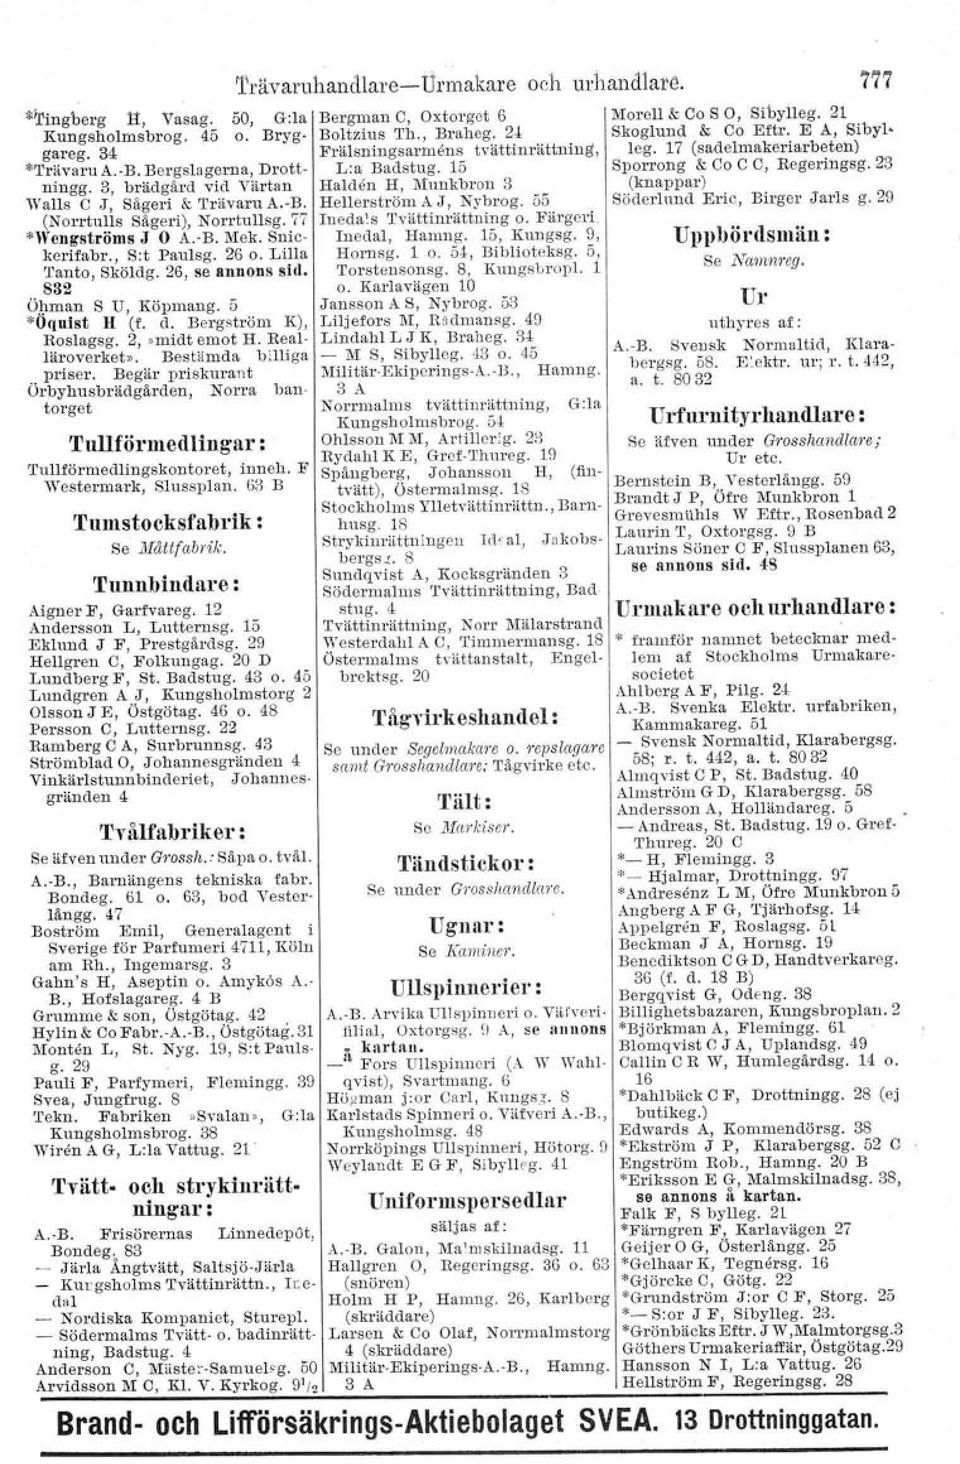 Bergström K), Tullförmedlingar : Tumstocksfabrik : Se Måttfabrik. Tunnbindare: Aigner F, Garfvareg. 12 Andersson L, Lutternsg. 15 Eklund J F, Prestgårdsg. 29 Hellgren O, Folkungag.